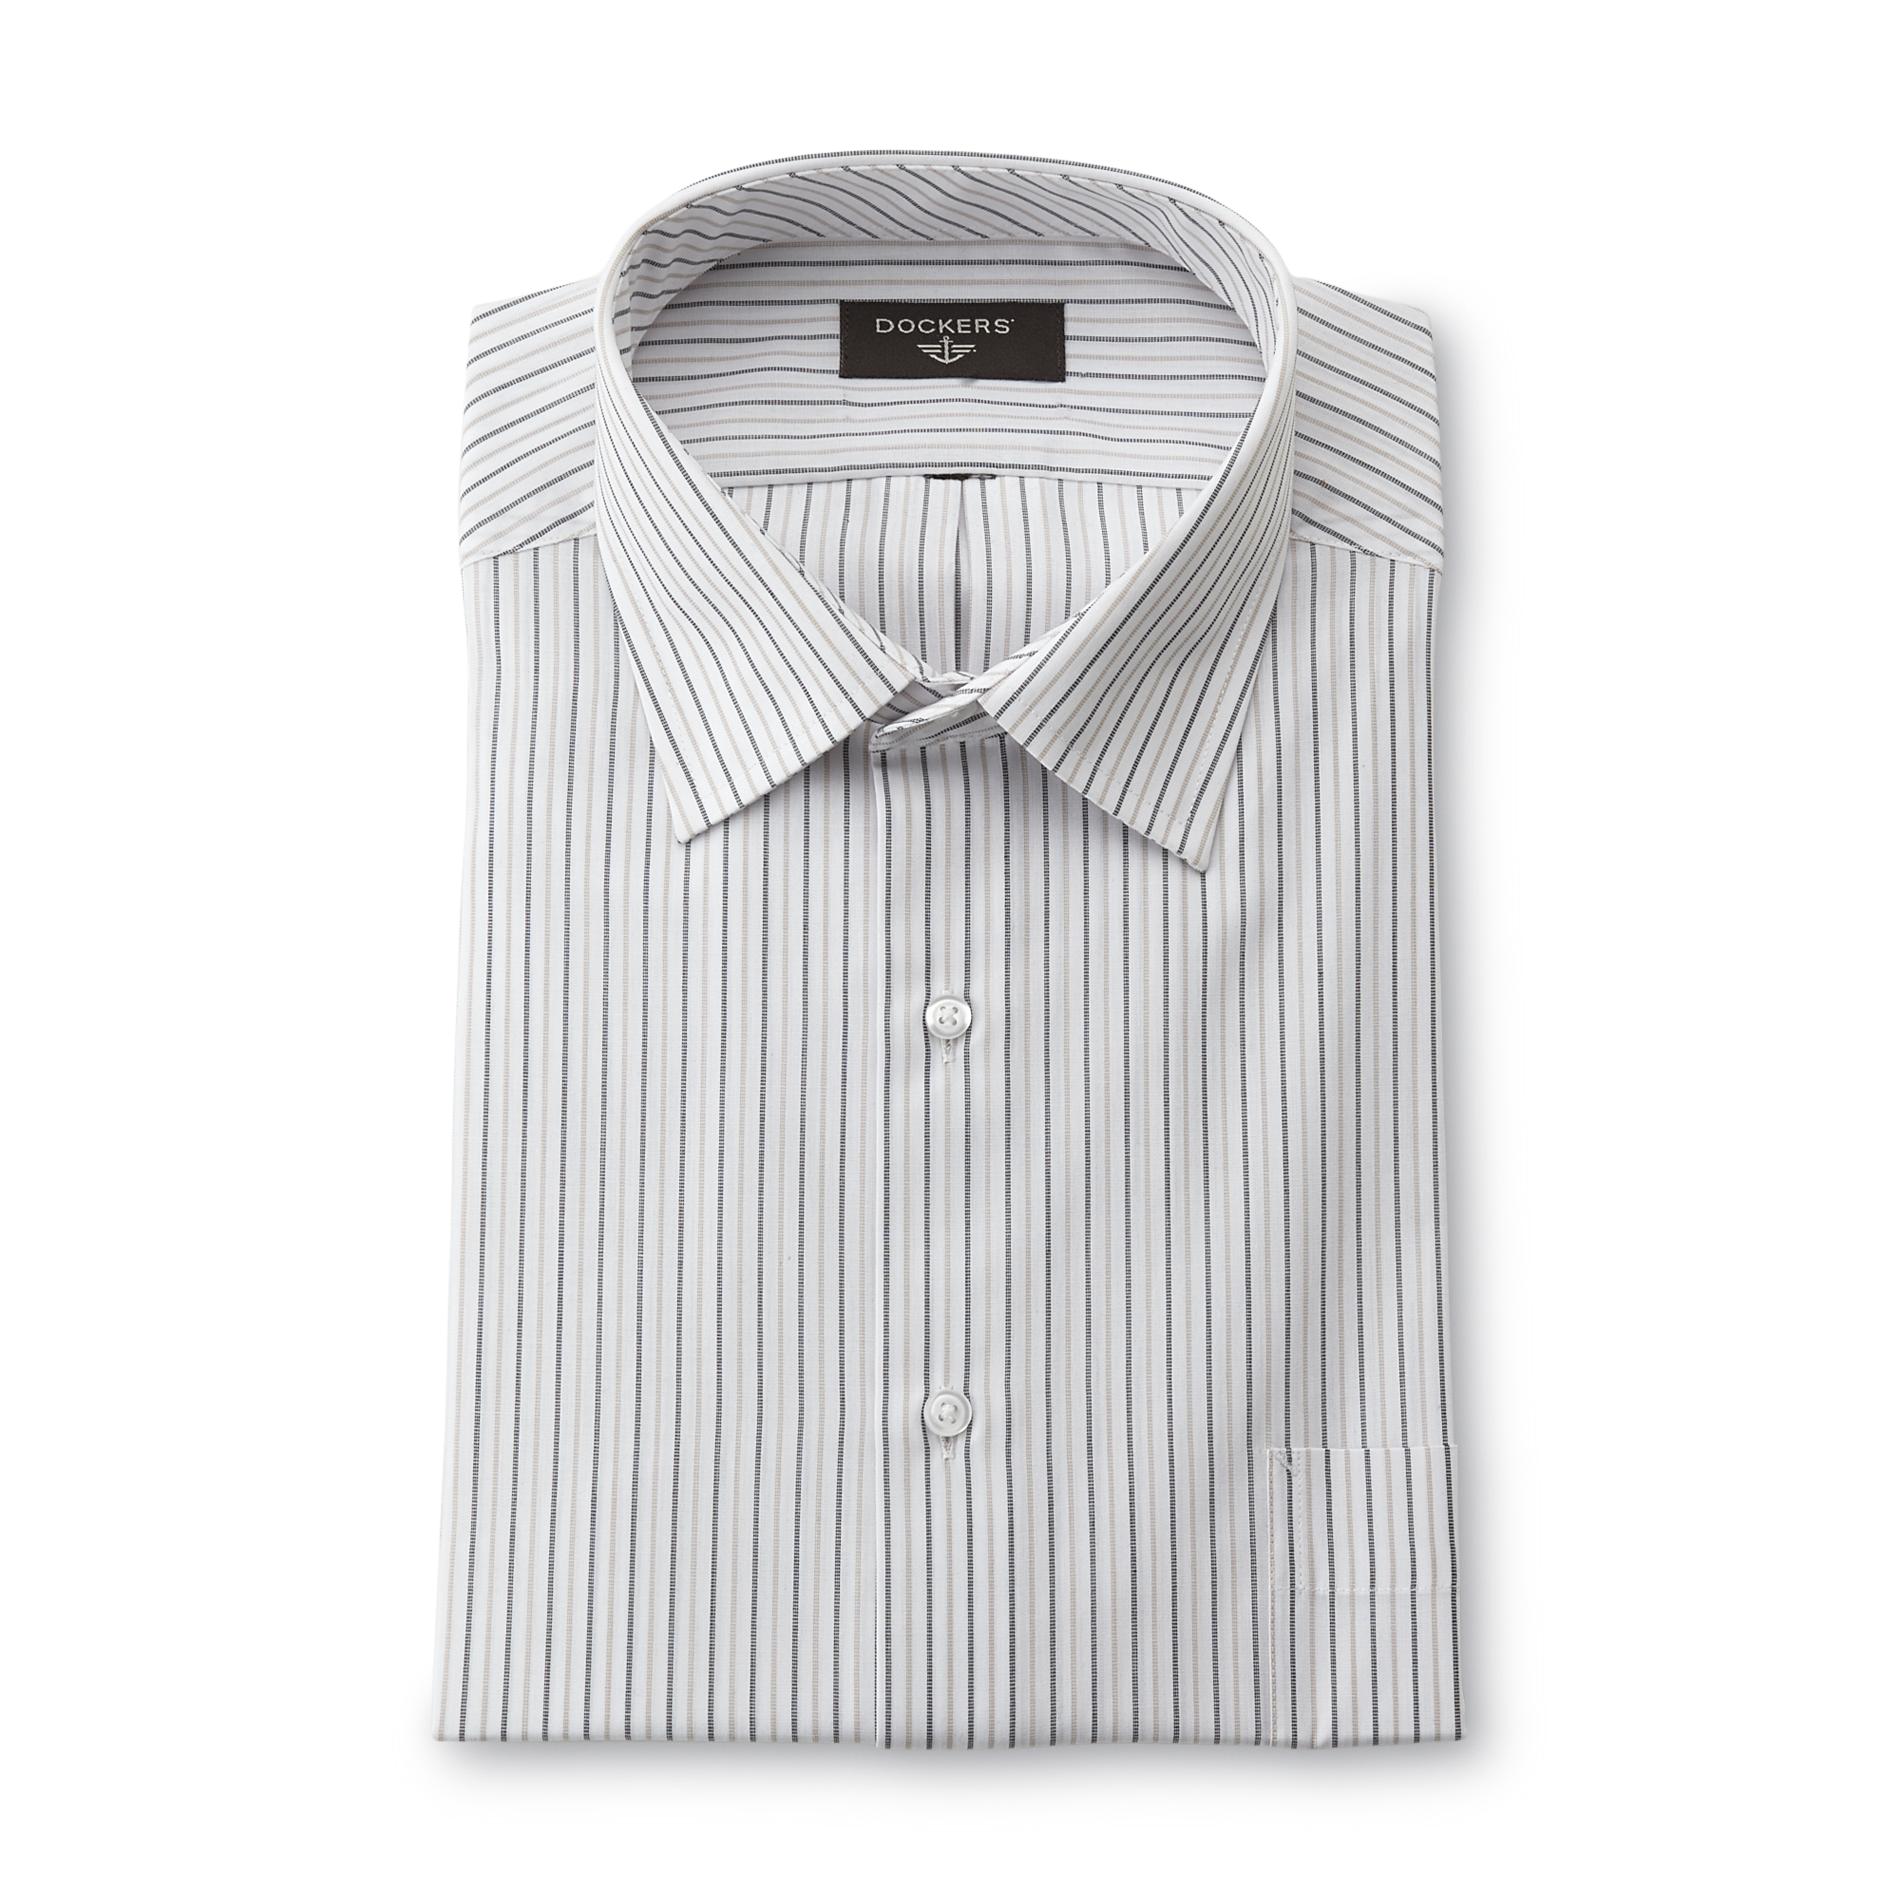 Dockers Men's Classic Fit Dress Shirt - Striped